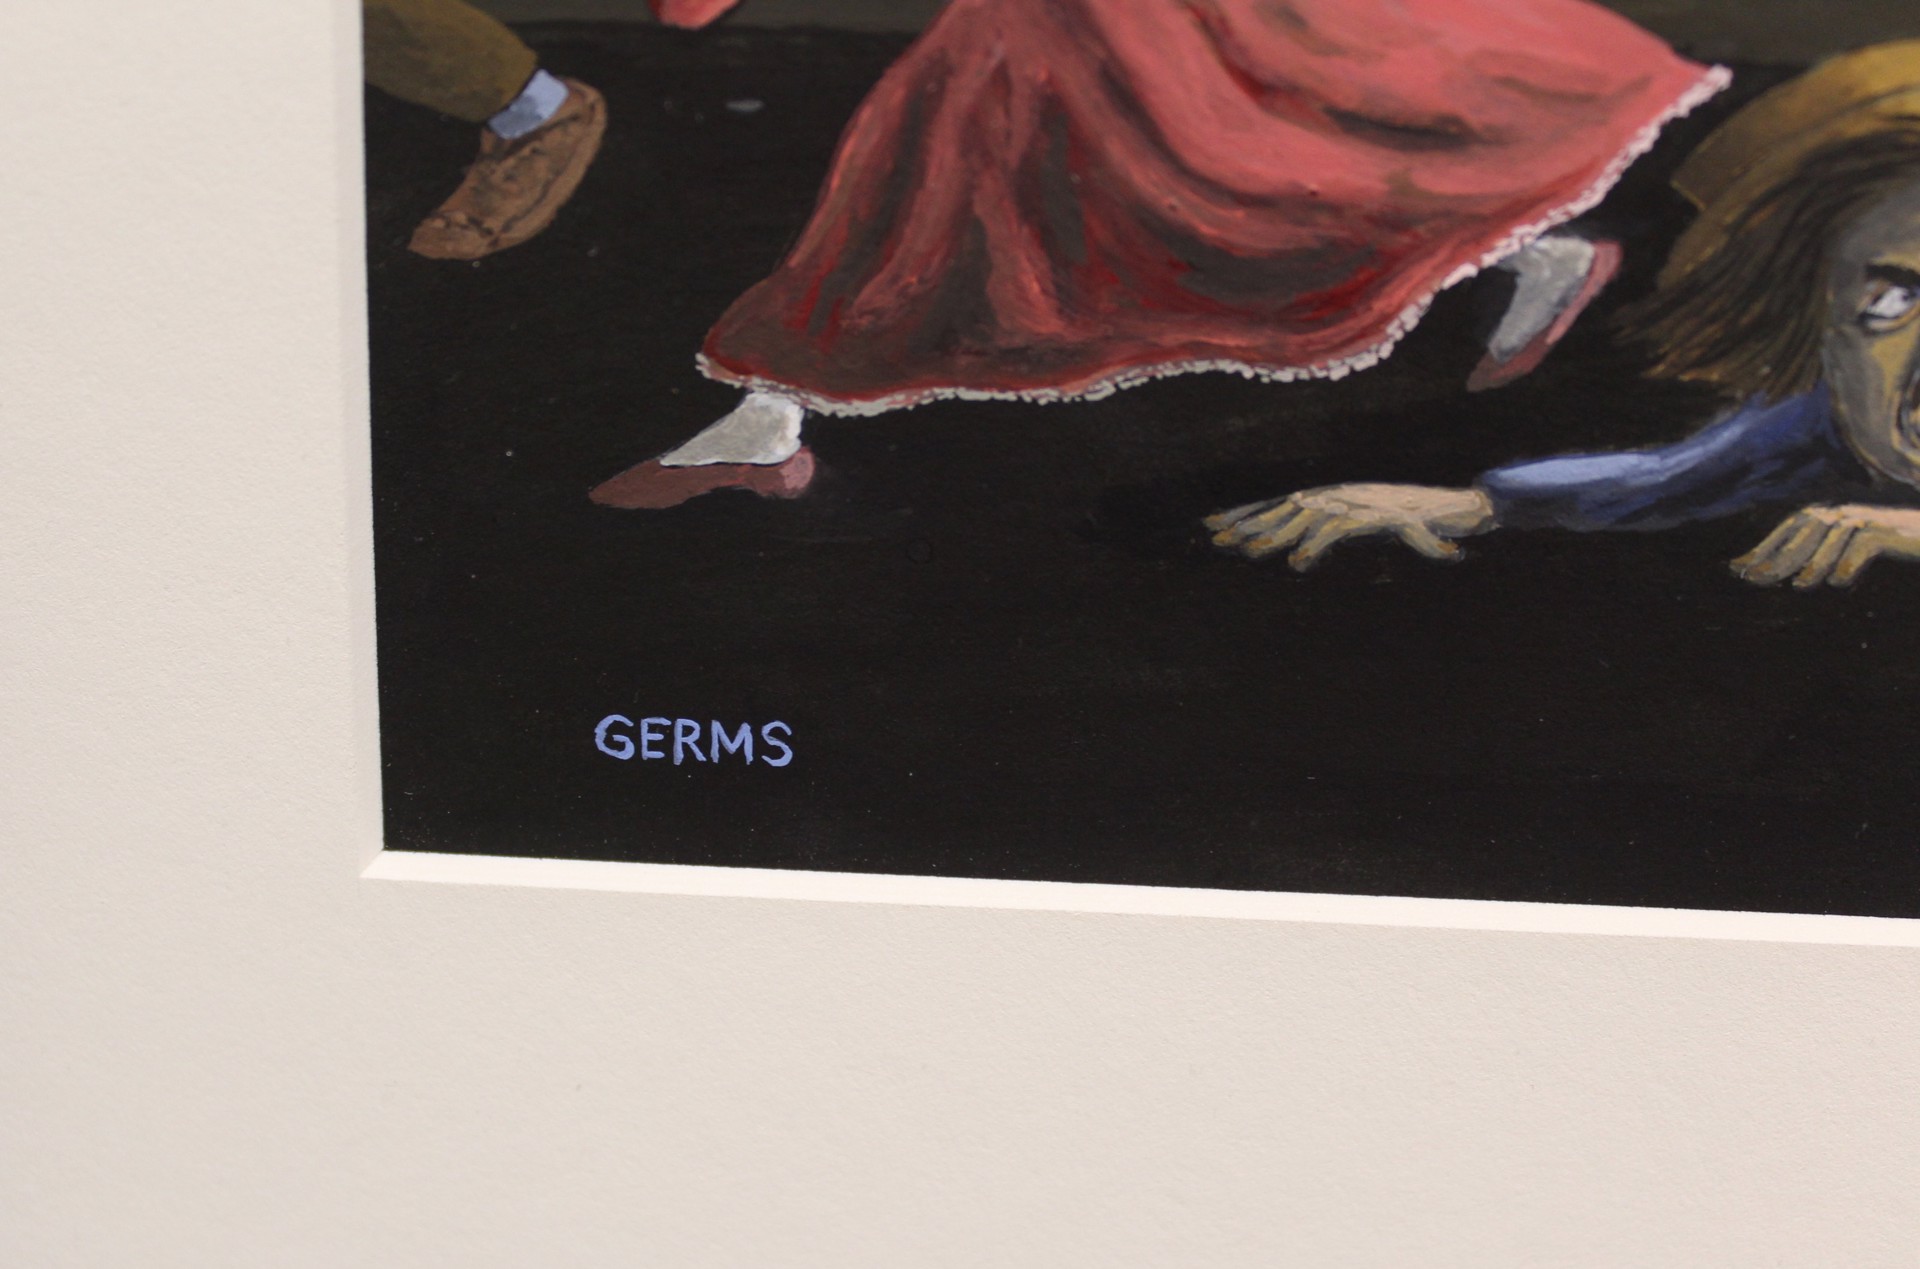 Germs by Jeff Pastorek